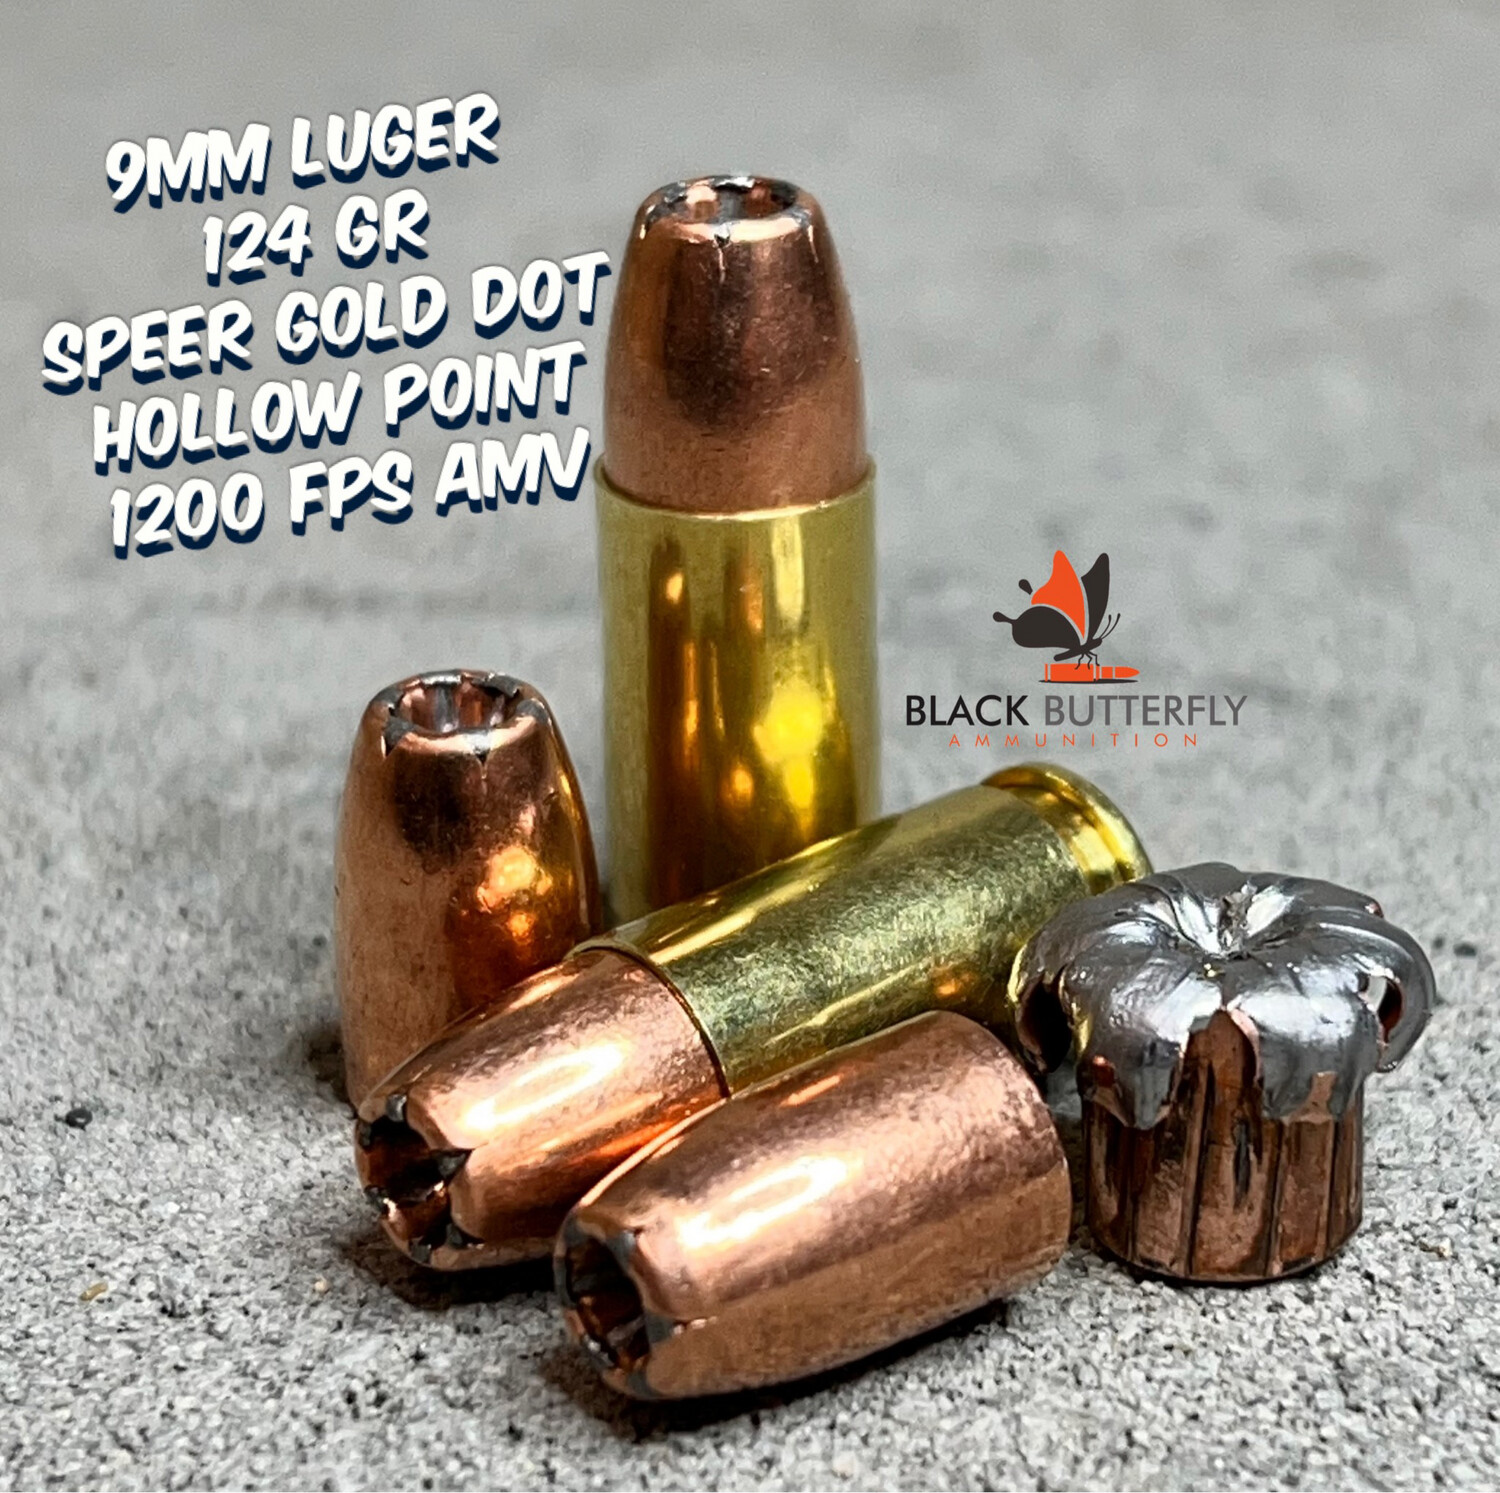 Black Butterfly Ammunition, Premium Self Defense and Hunting Ammo, 9mm Luger, 124 gr, 20 Rounds, Speer Gold Dot (1200 FPS AMV), SAMPLE PACK